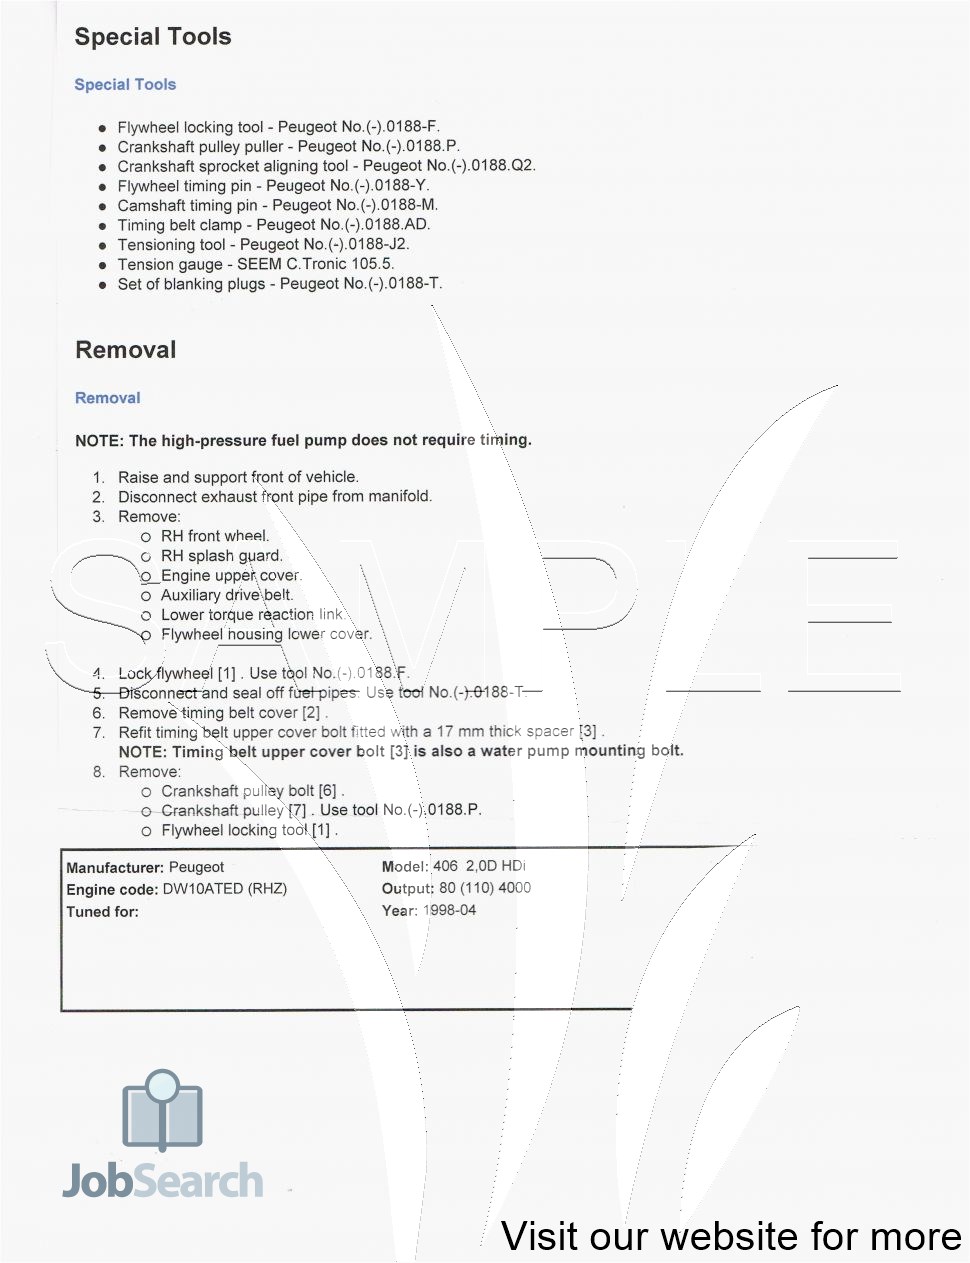 resume sample format simple resume format in word simple resume sample simple resume format pdf simple resume examples